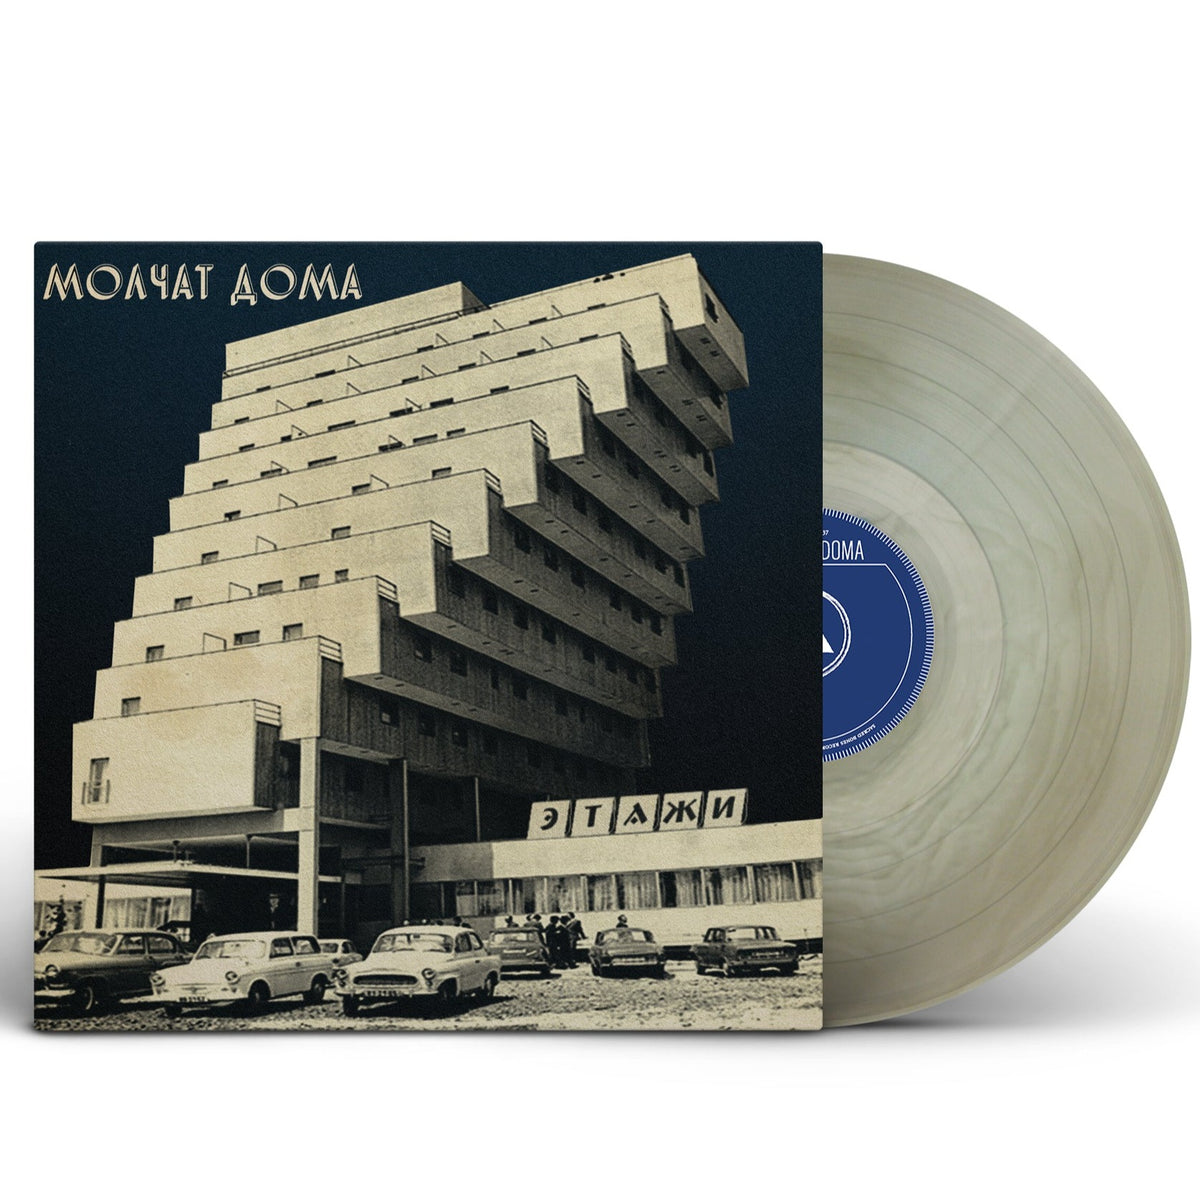 Molchat Doma - Etazhi LP (15th Anniversary Edition, Seaglass Wave Vinyl)